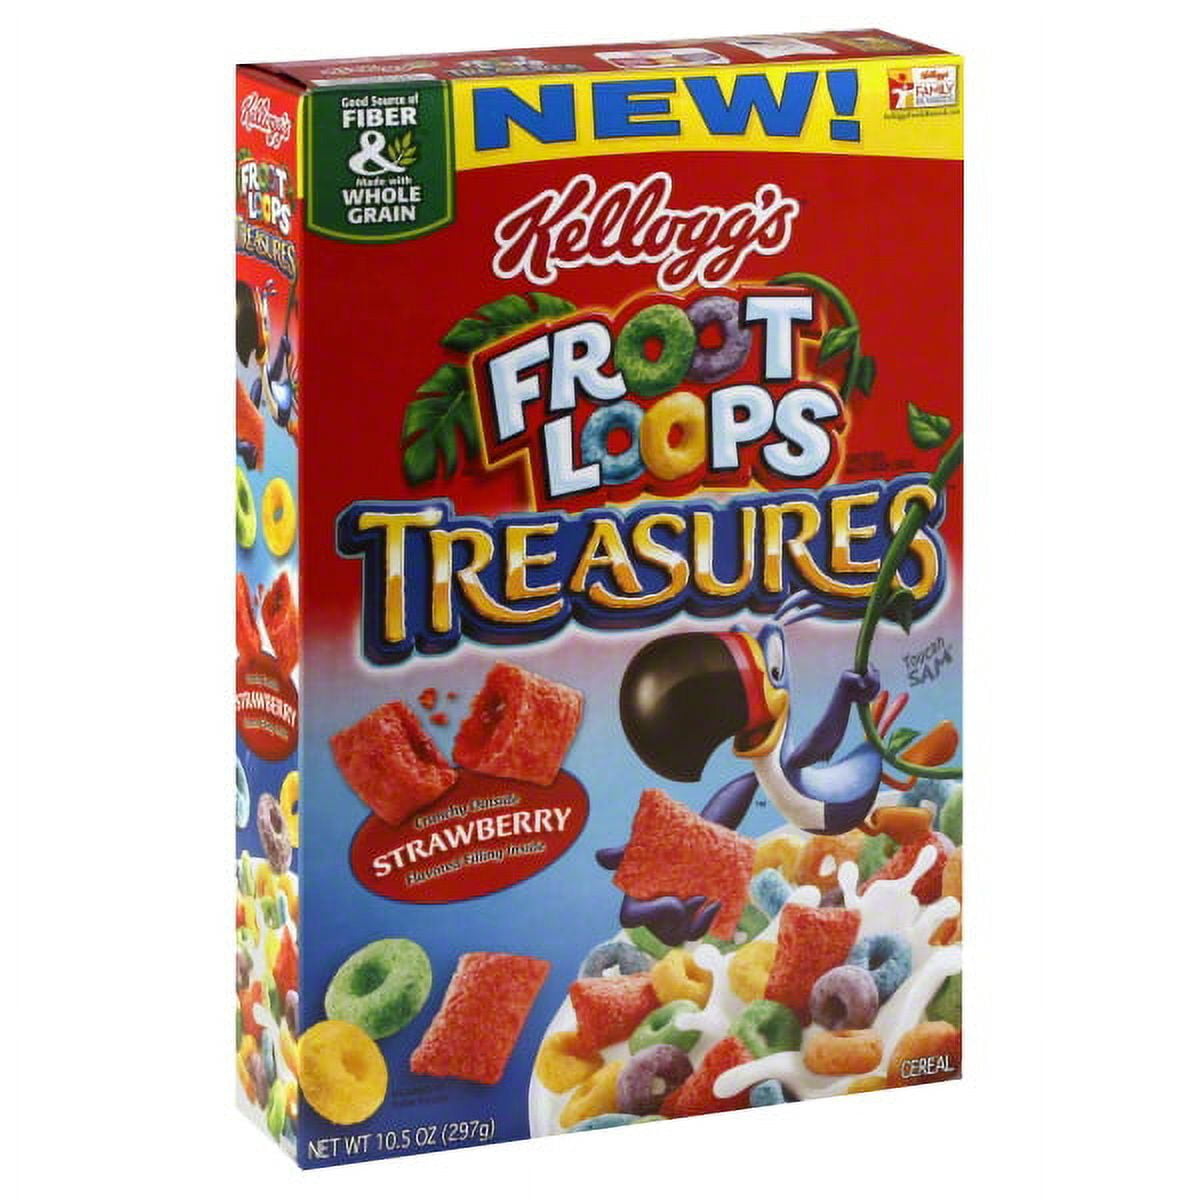 Kellogg's® Froot Loops Original Cereal, 10.1 oz - Kroger